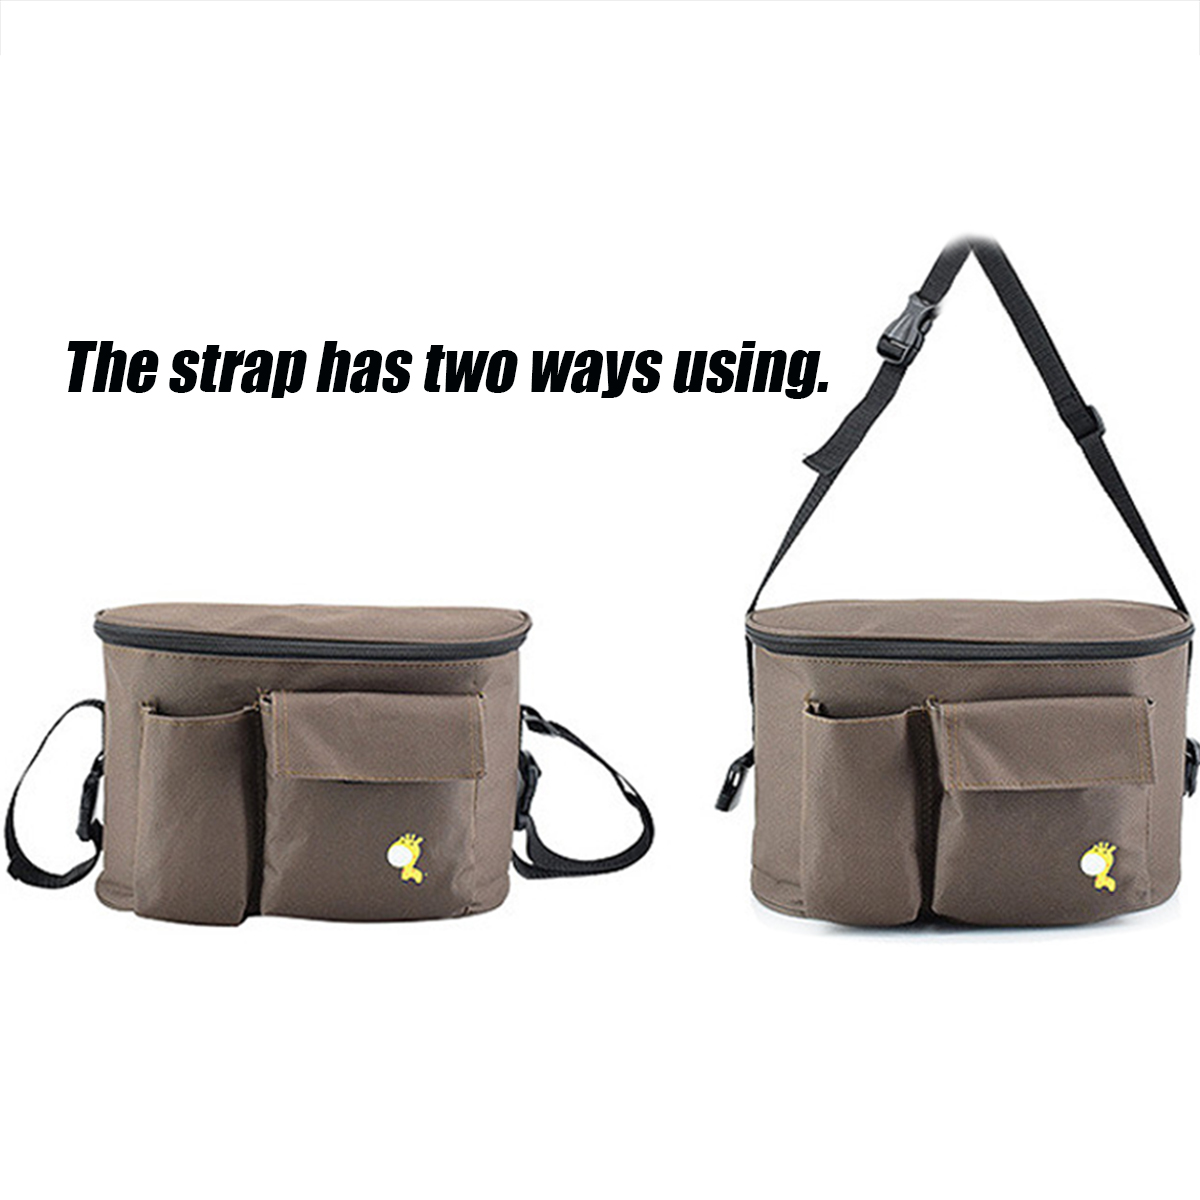 Stroller-Baby-Nappy-Changing-Bag-Travel-Shoulder-Diaper-Buggy-Pram-Pushchair-Strorage-Pouch-1523256-2